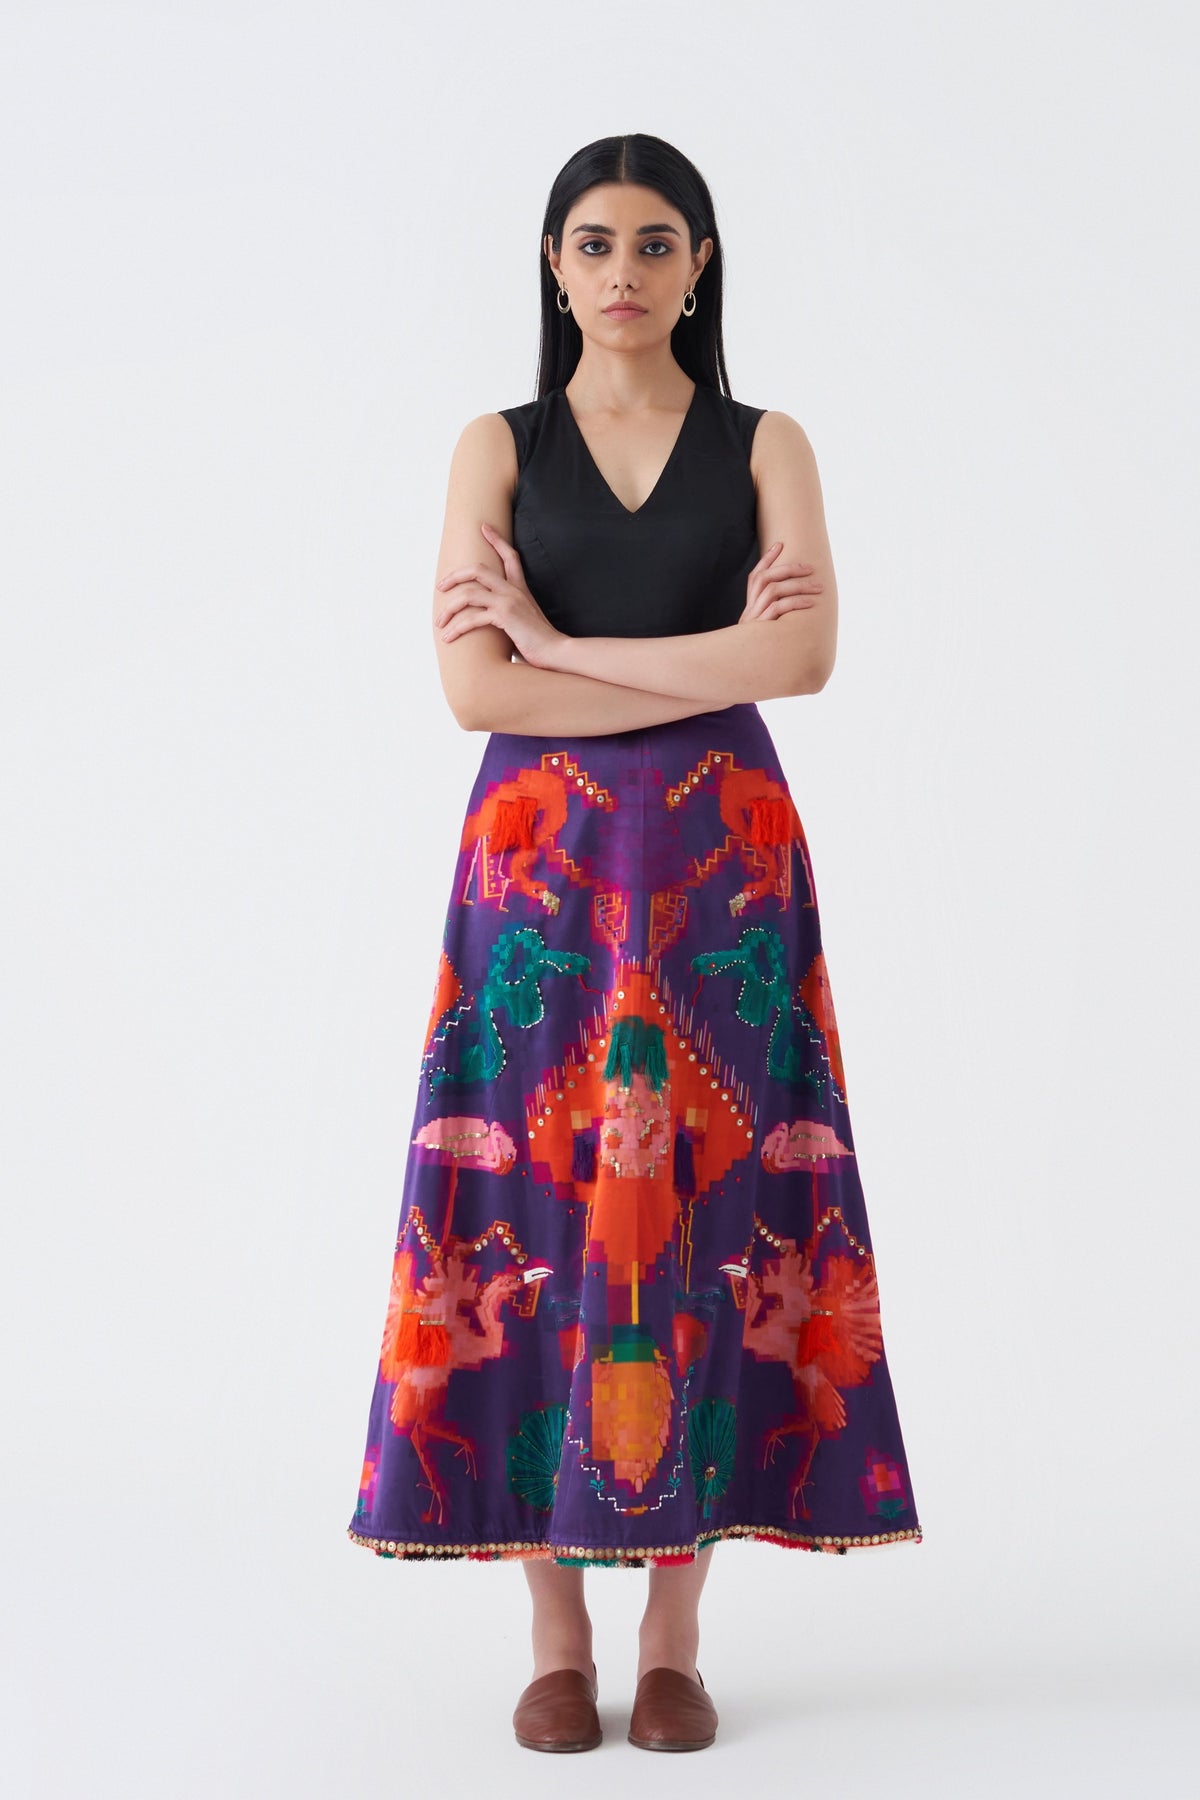 Oaxaca Morado Skirt